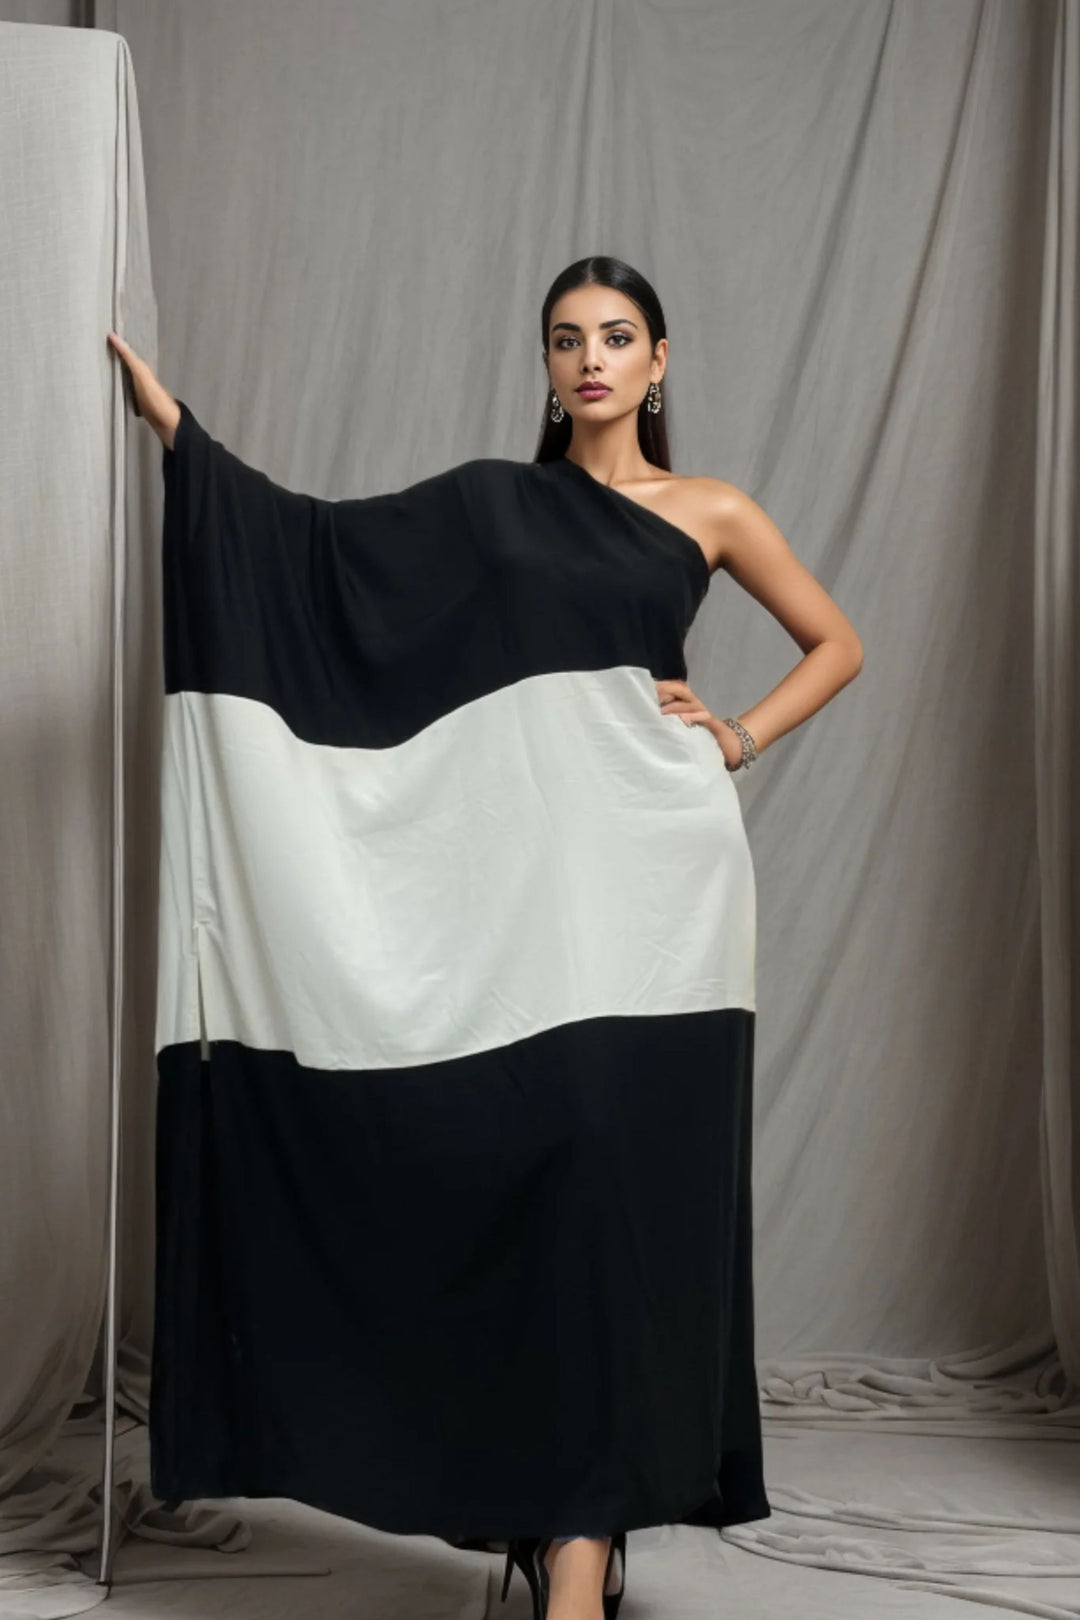 resort wear kaftan dress in black and white